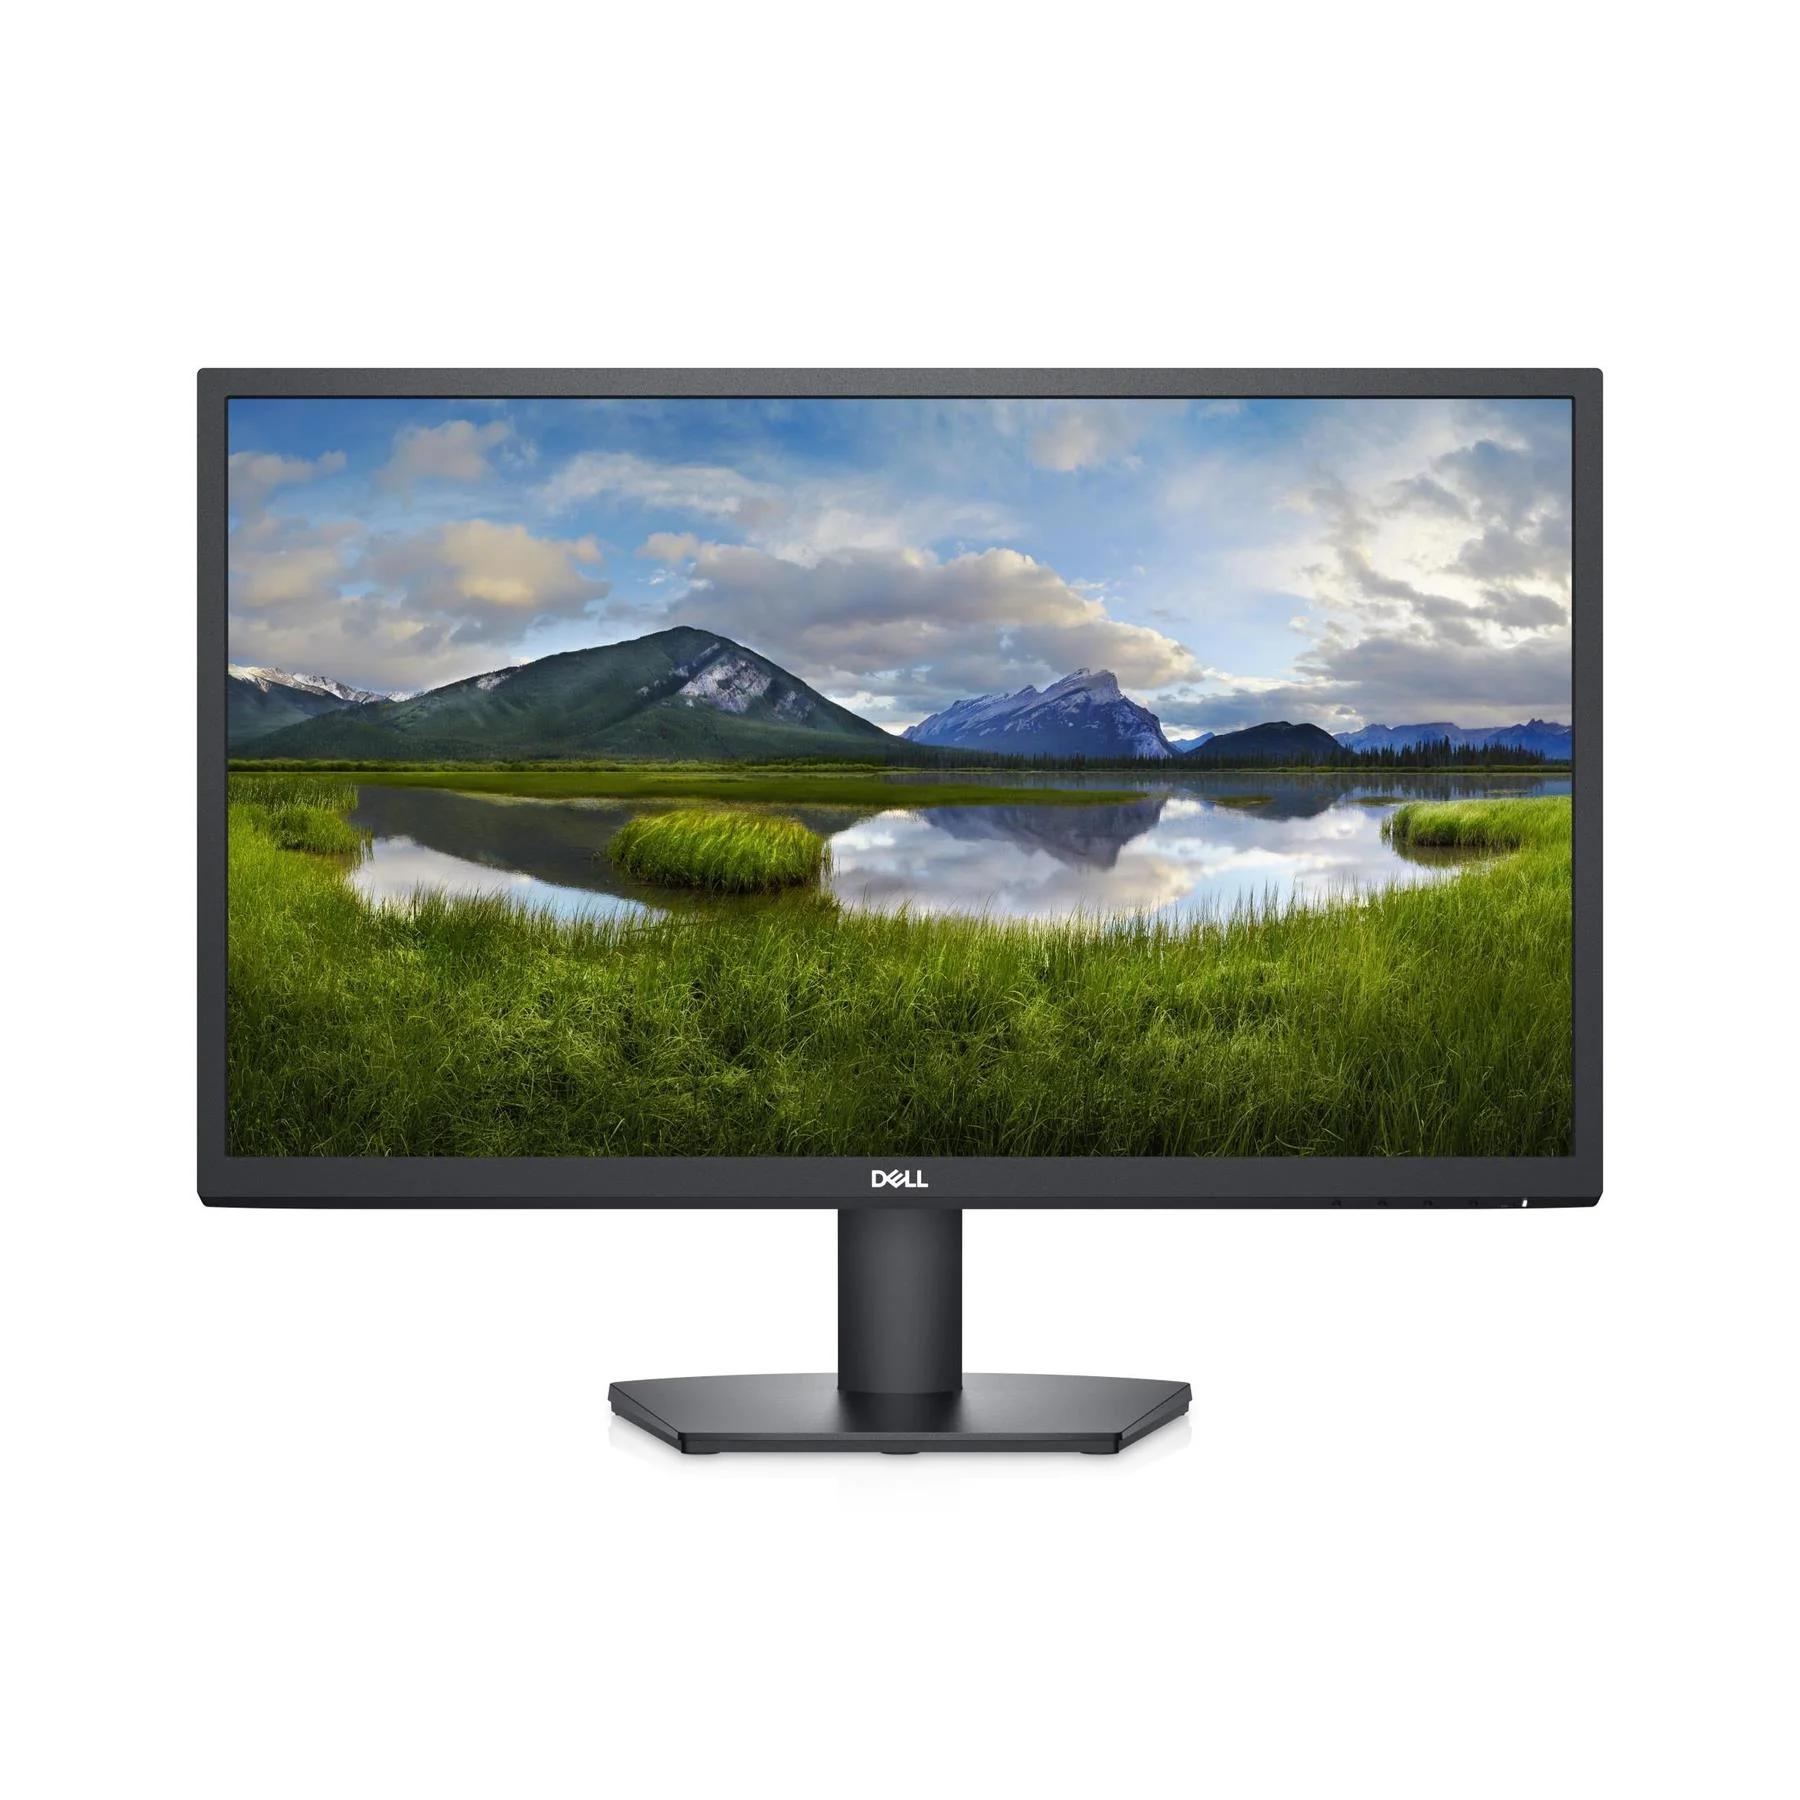 Dell SE2422H 23.8-inch Full HD 8ms LCD Monitor